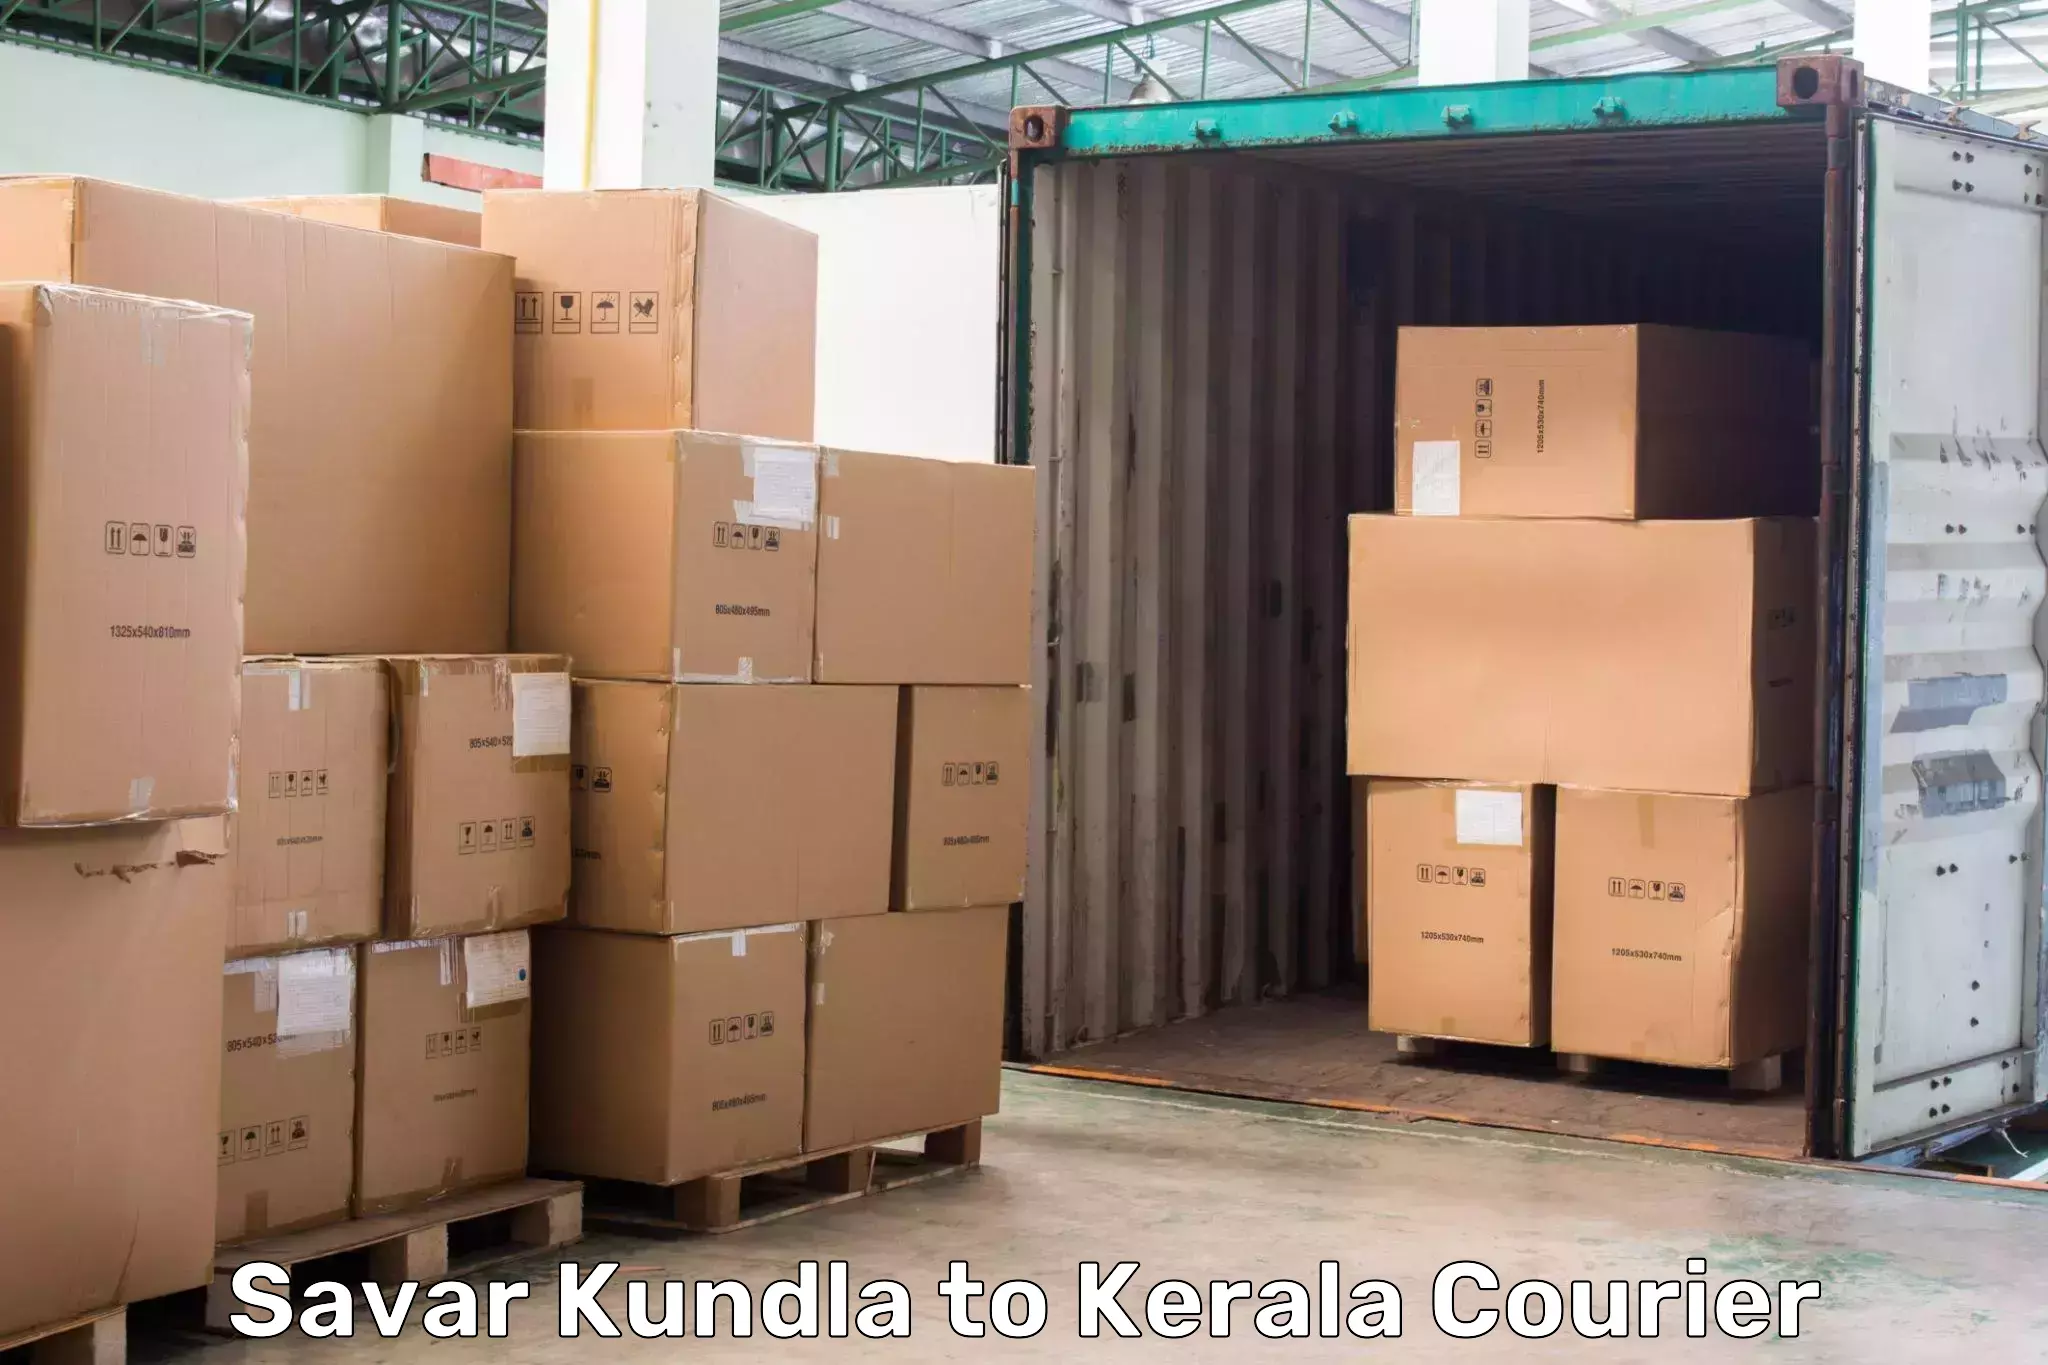 Global logistics network Savar Kundla to Kerala